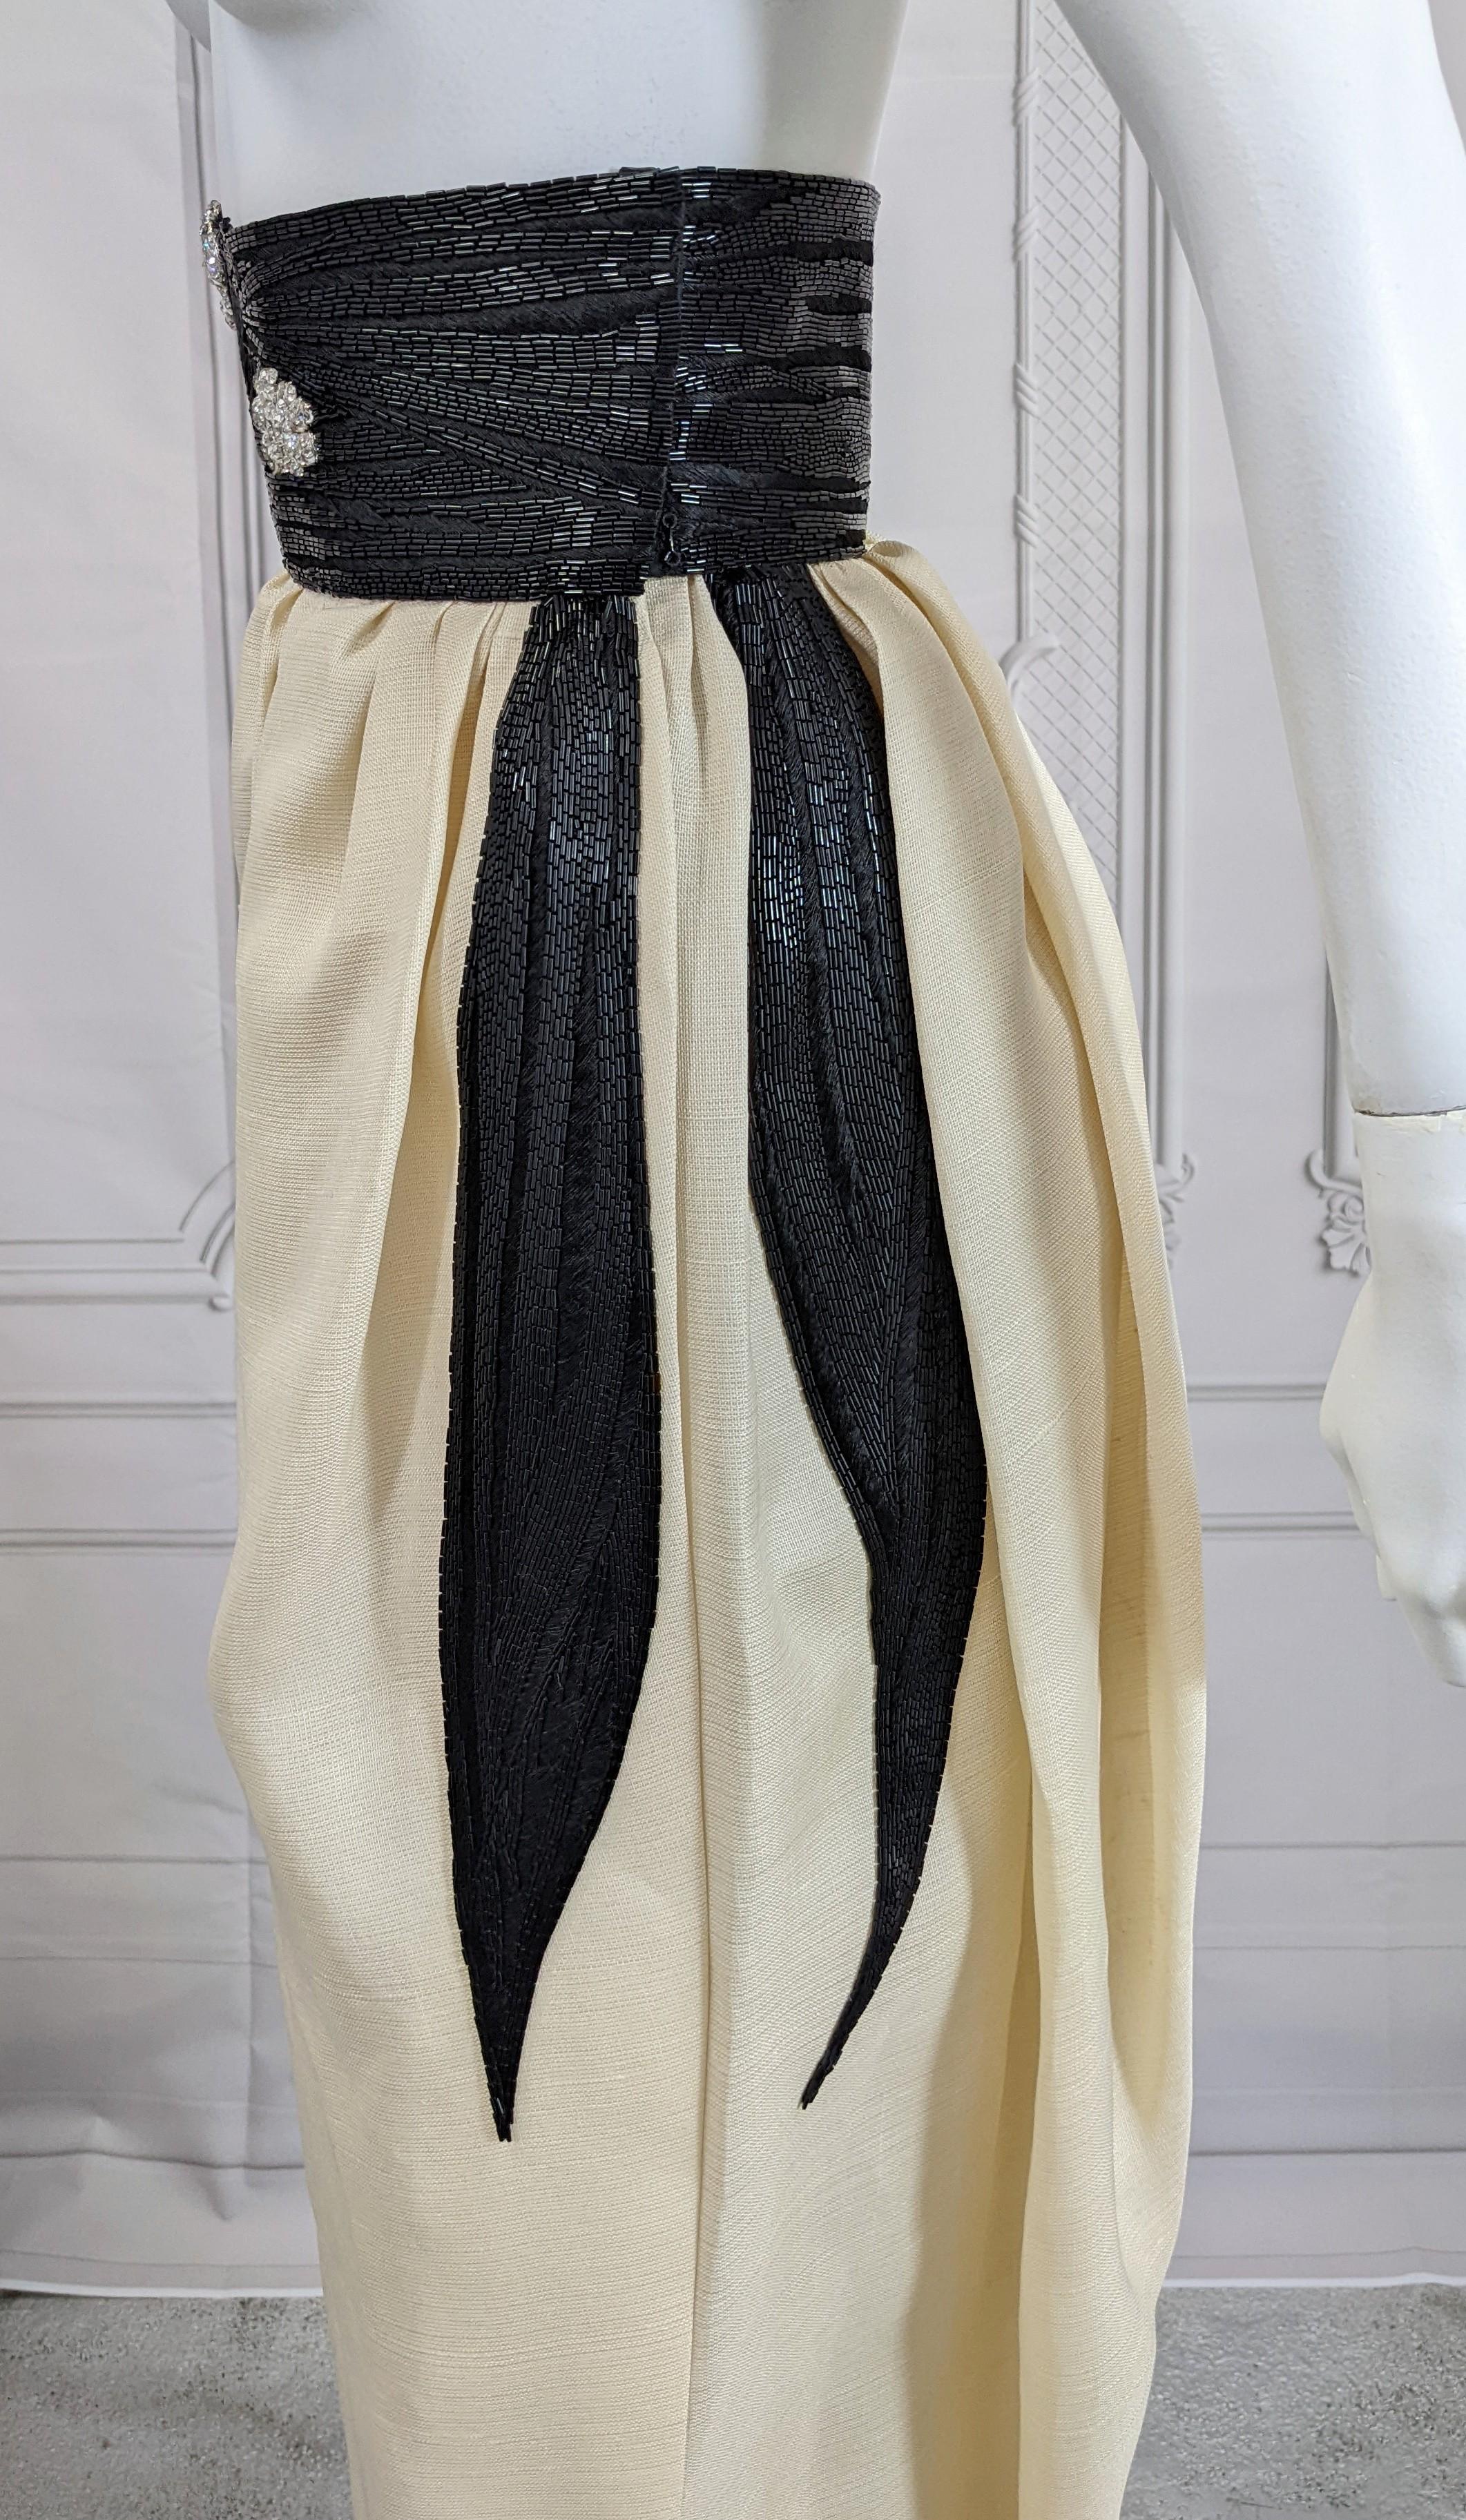 Dior Haute Couture Beaded Gazar Skirt 2